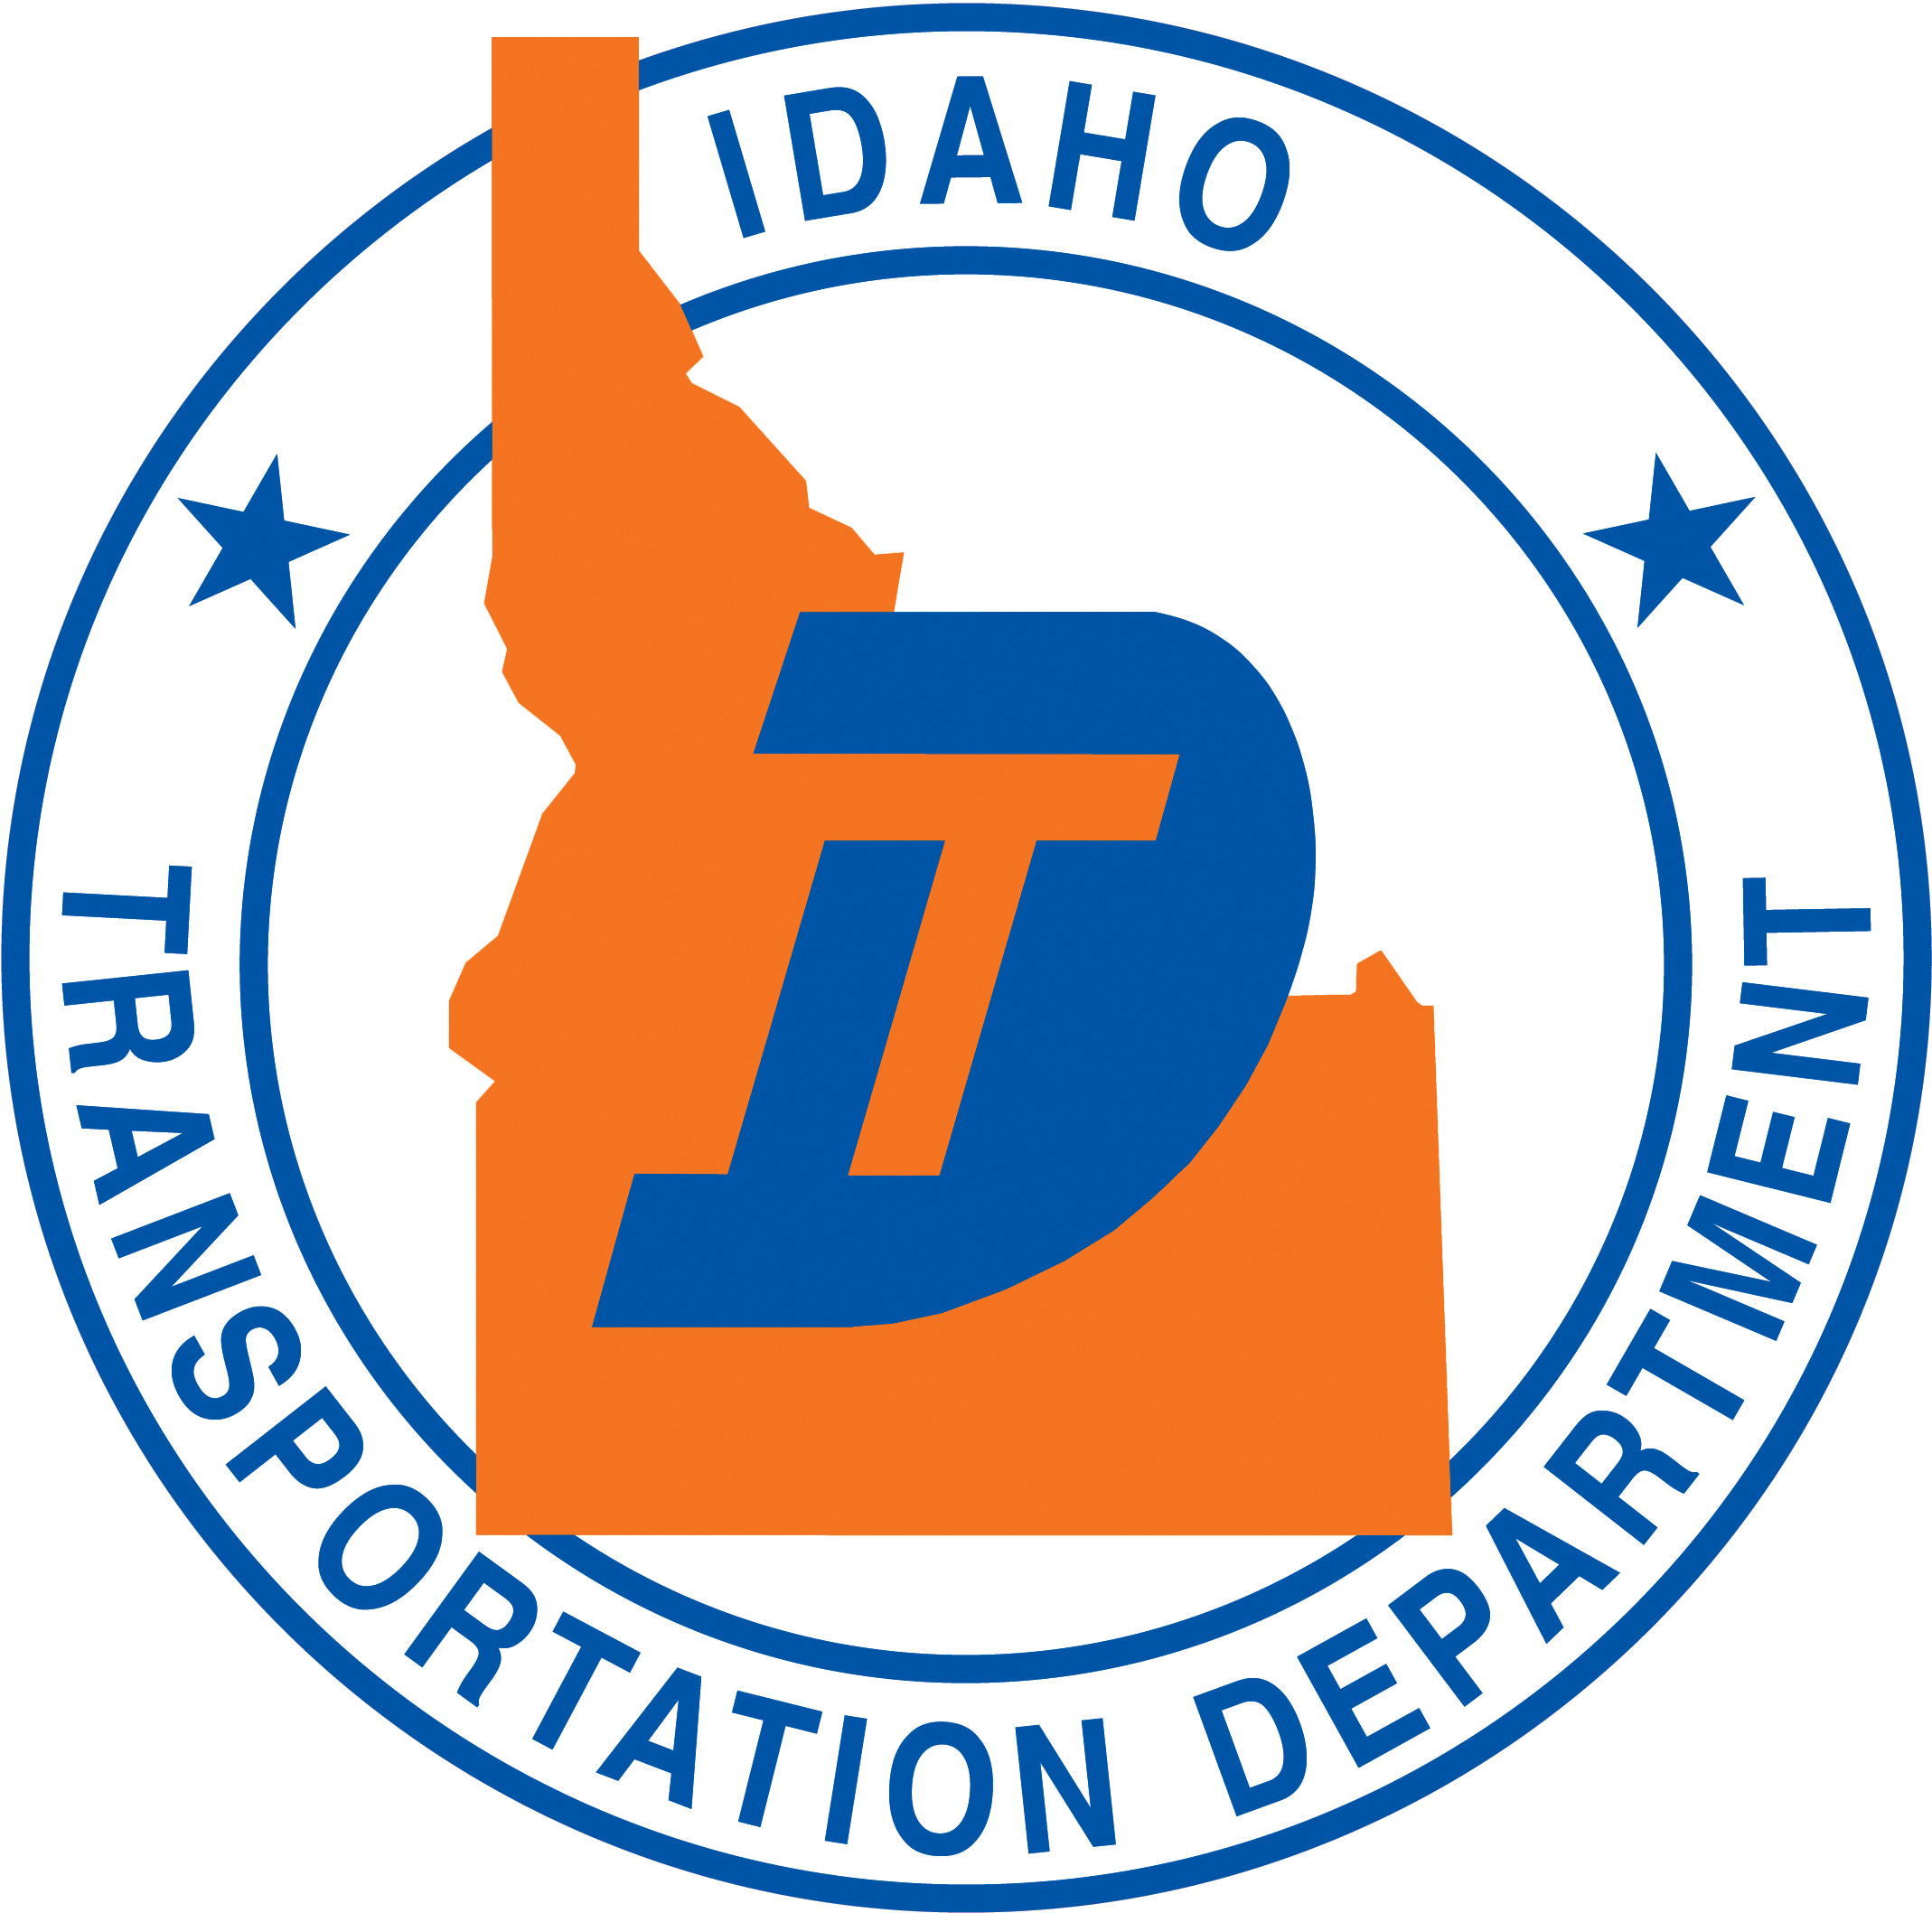 Ids ch. Department of Transportation. Proline itd logo. Dept ID. Itd 167.